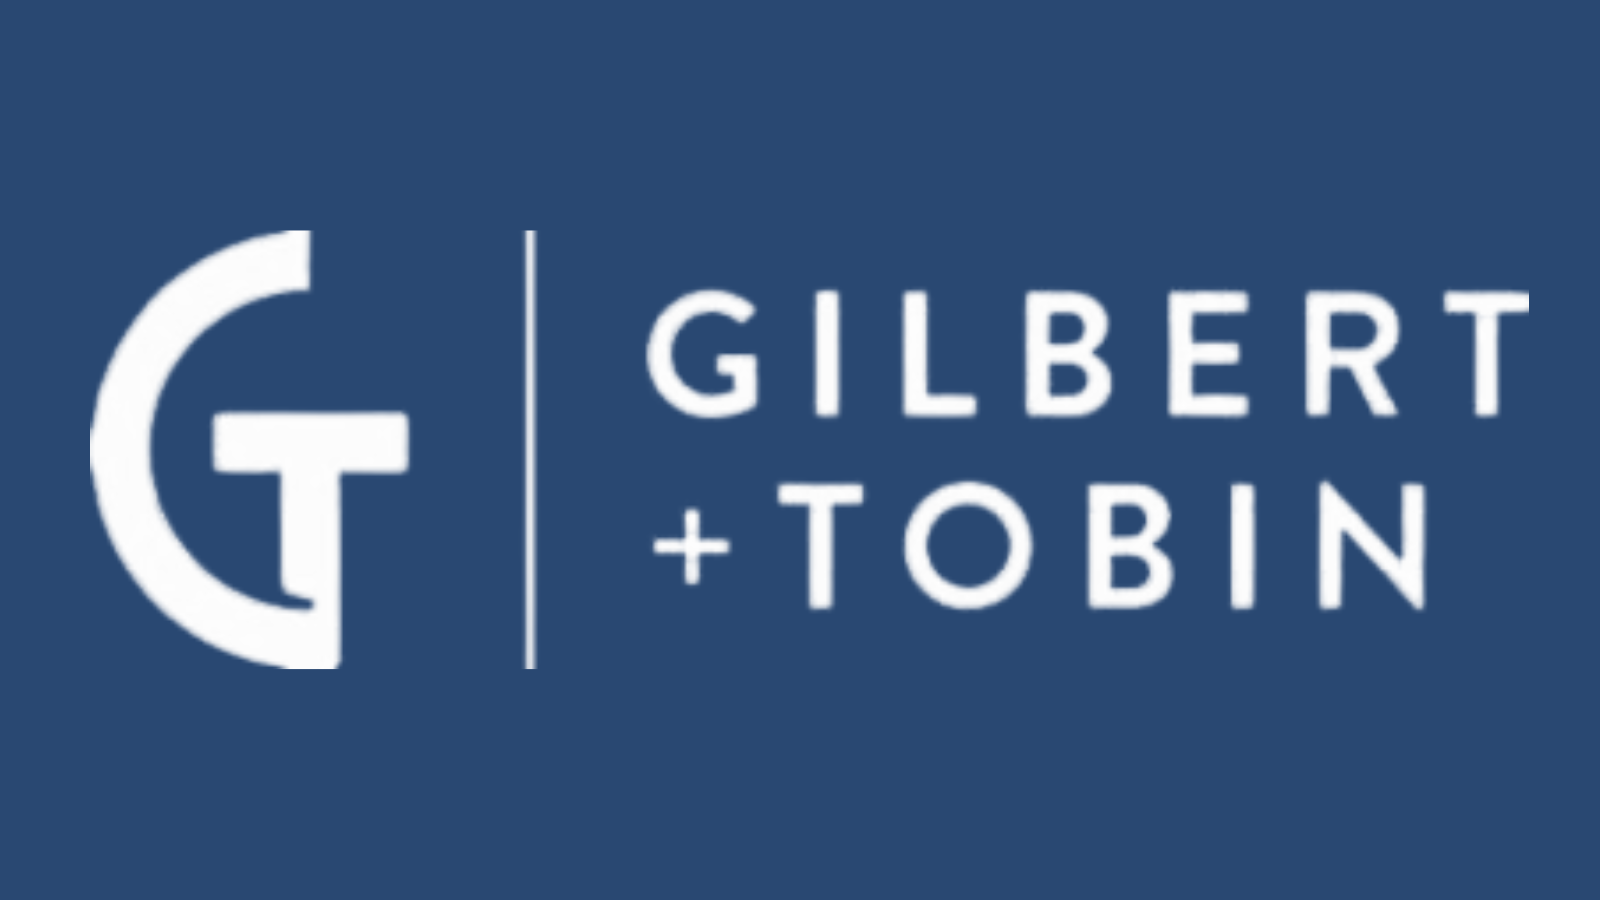 Gilbert + Tobin logo